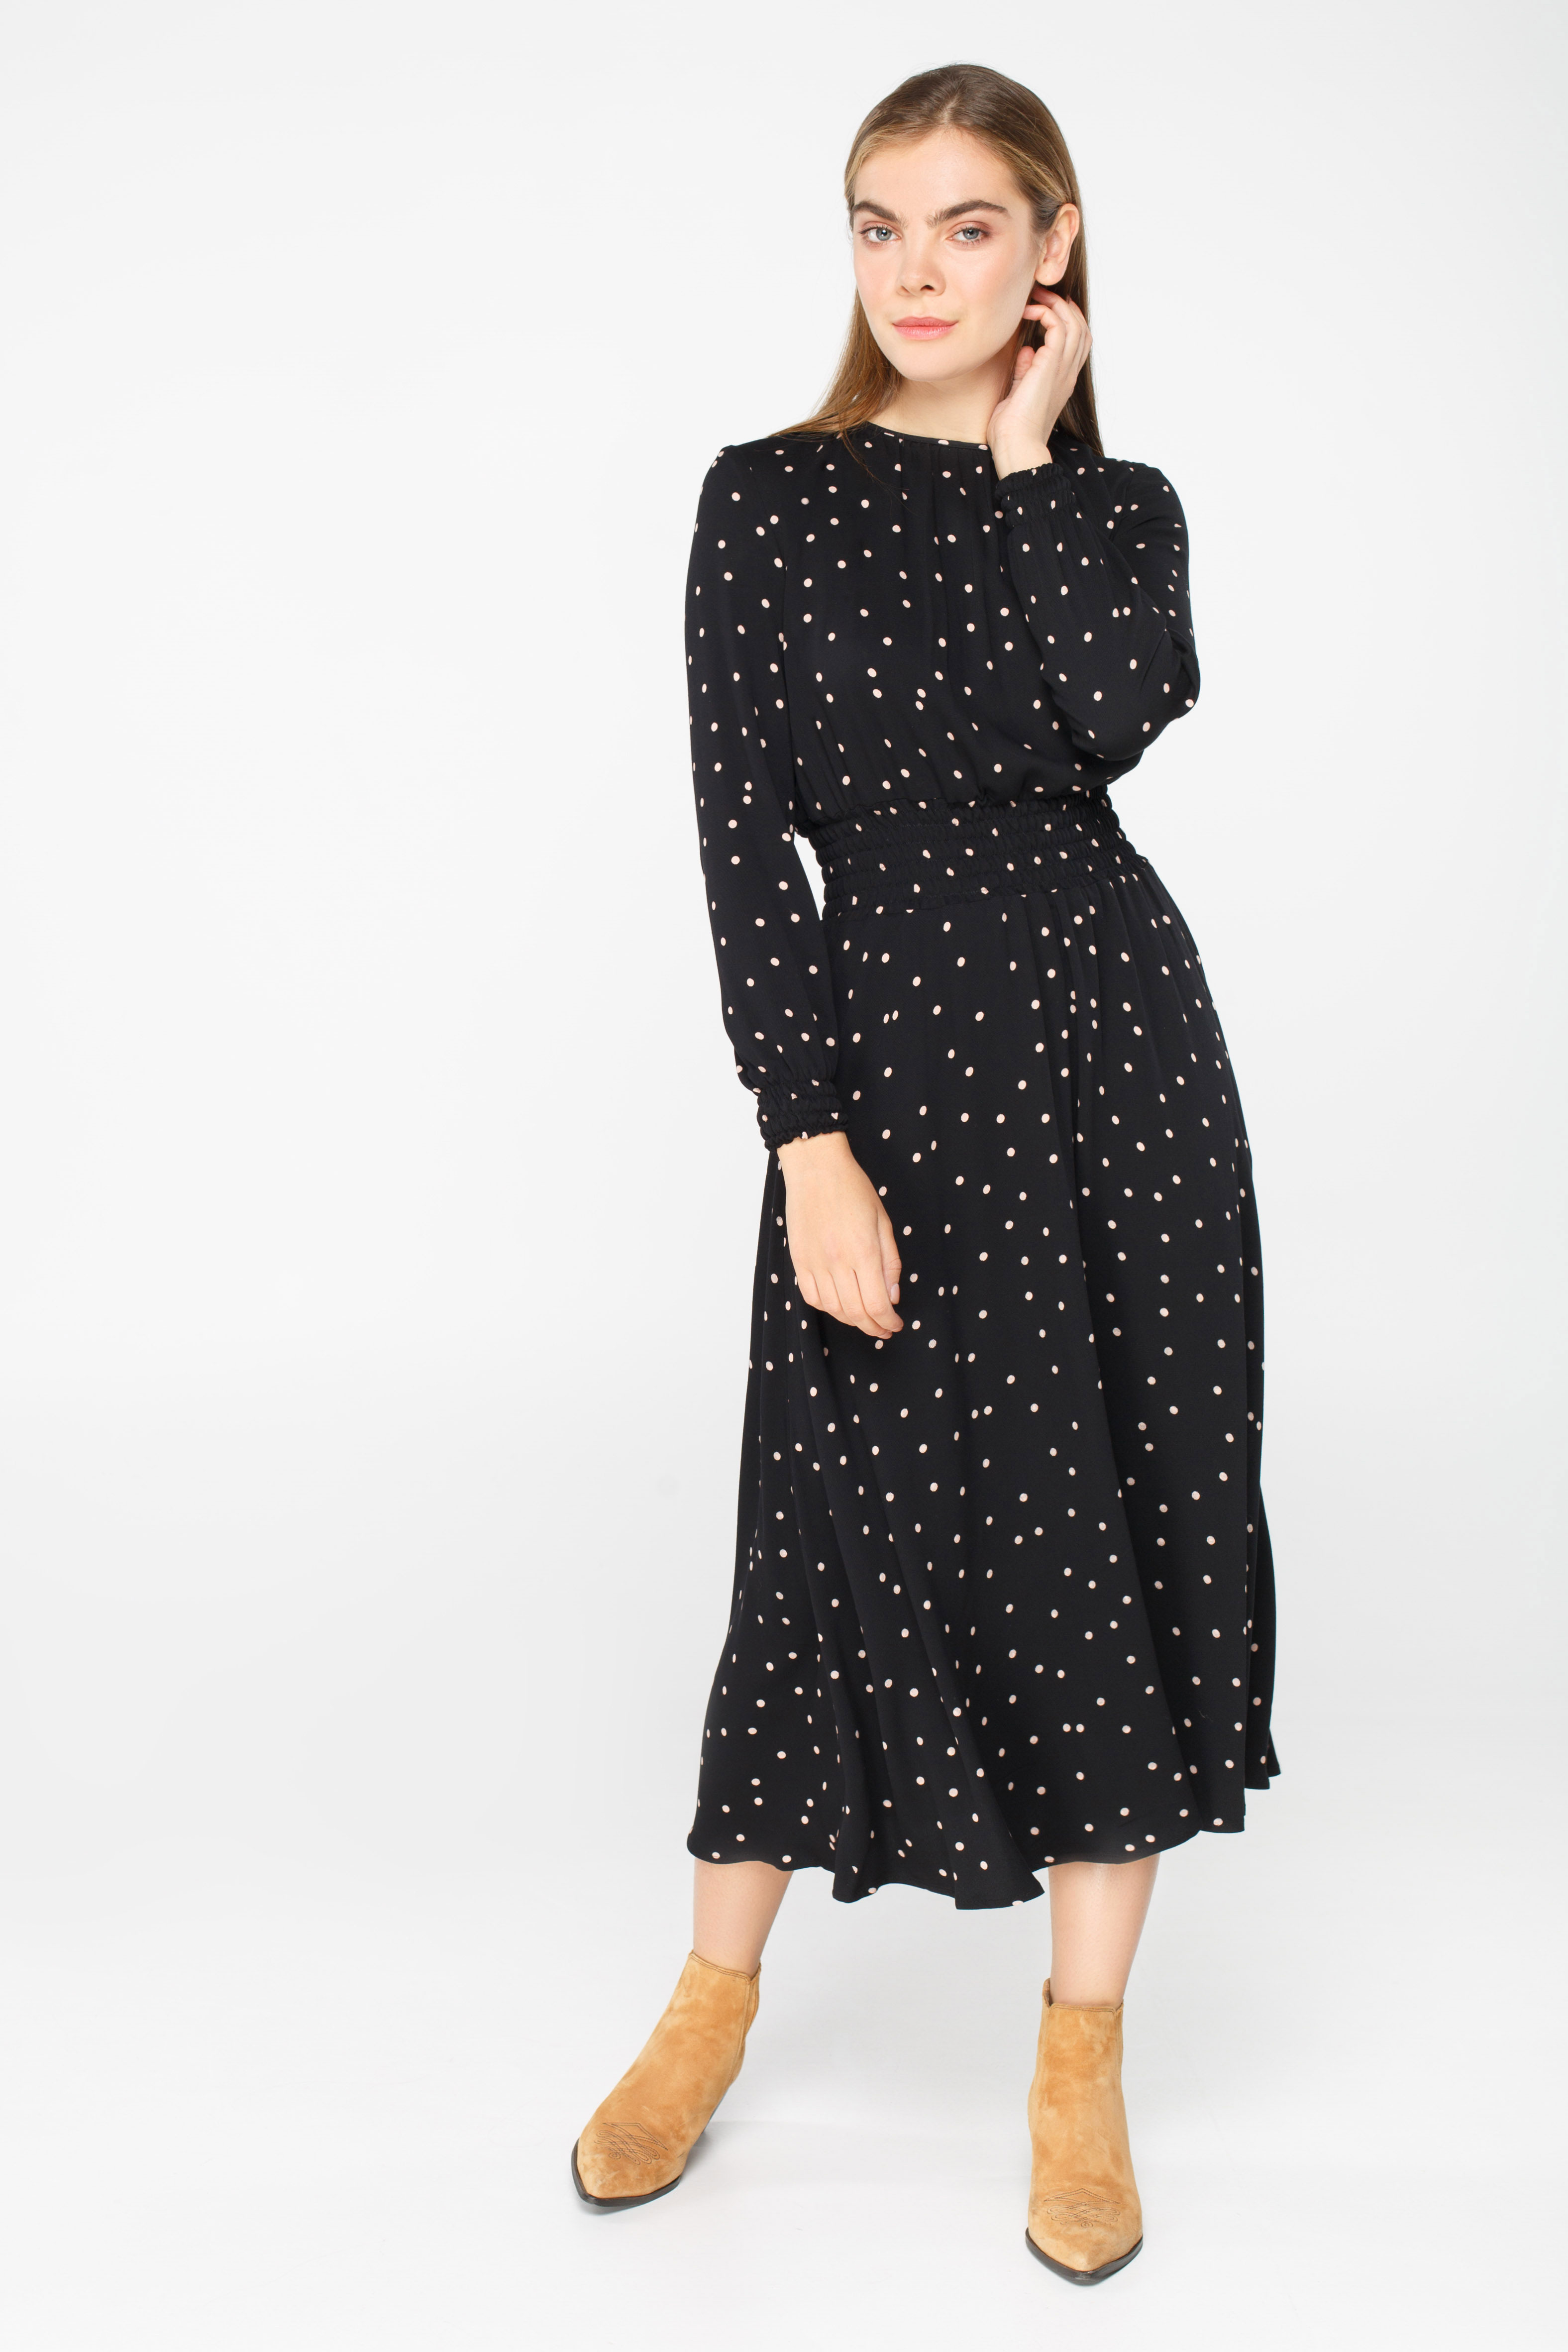 Black polka dot midi dress with elastic waist and cuffs , photo 2